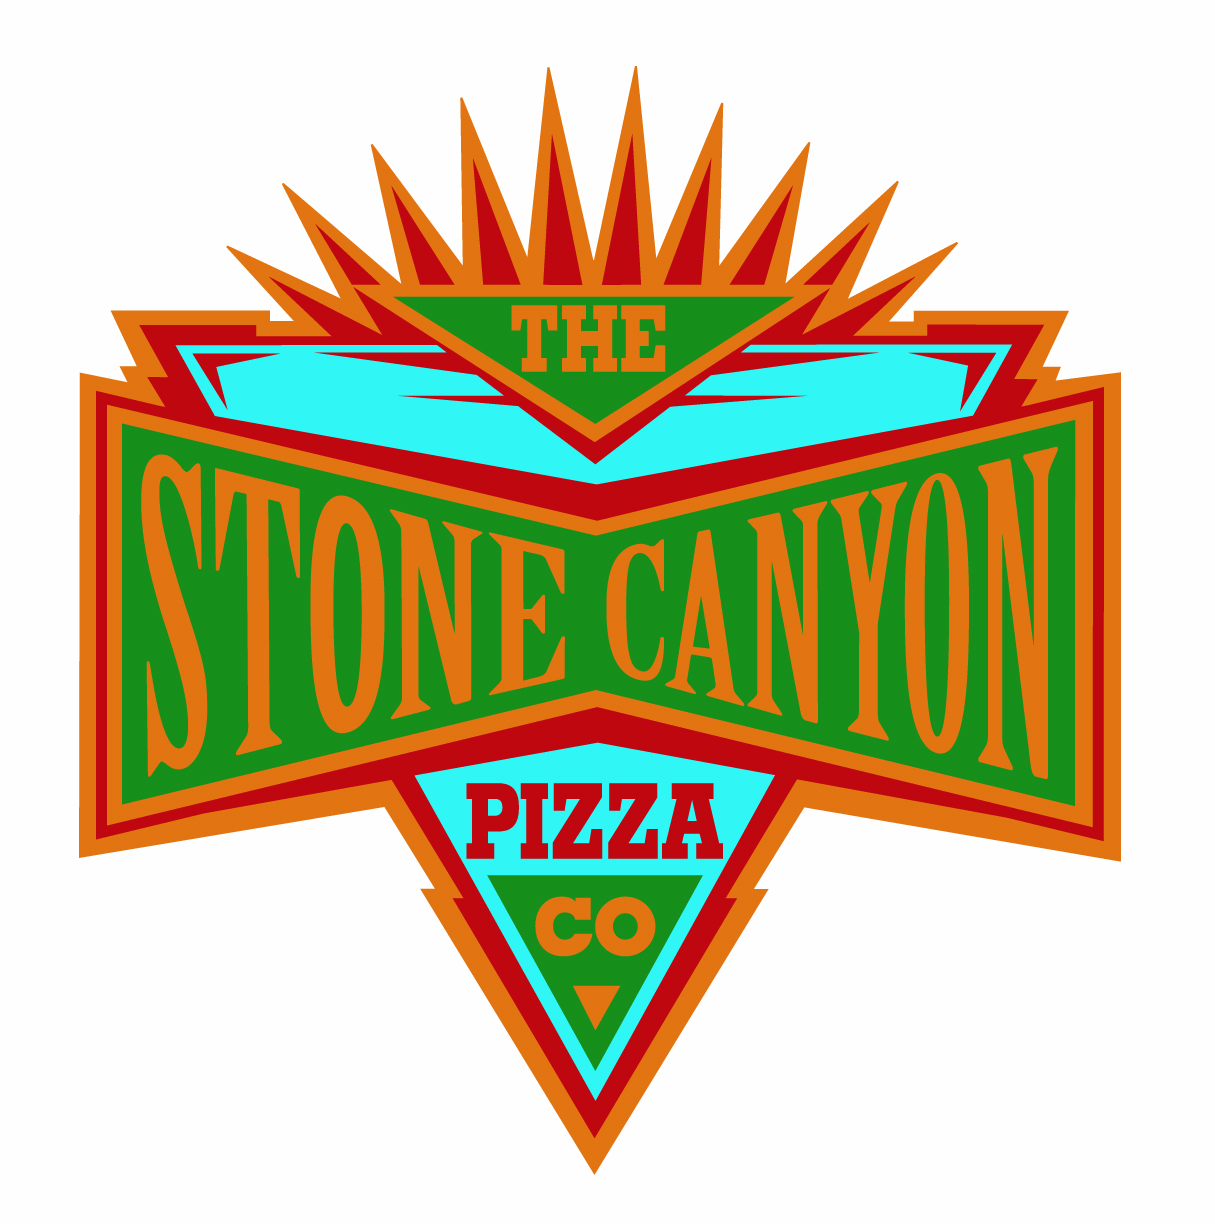 Stone Canyon - Color